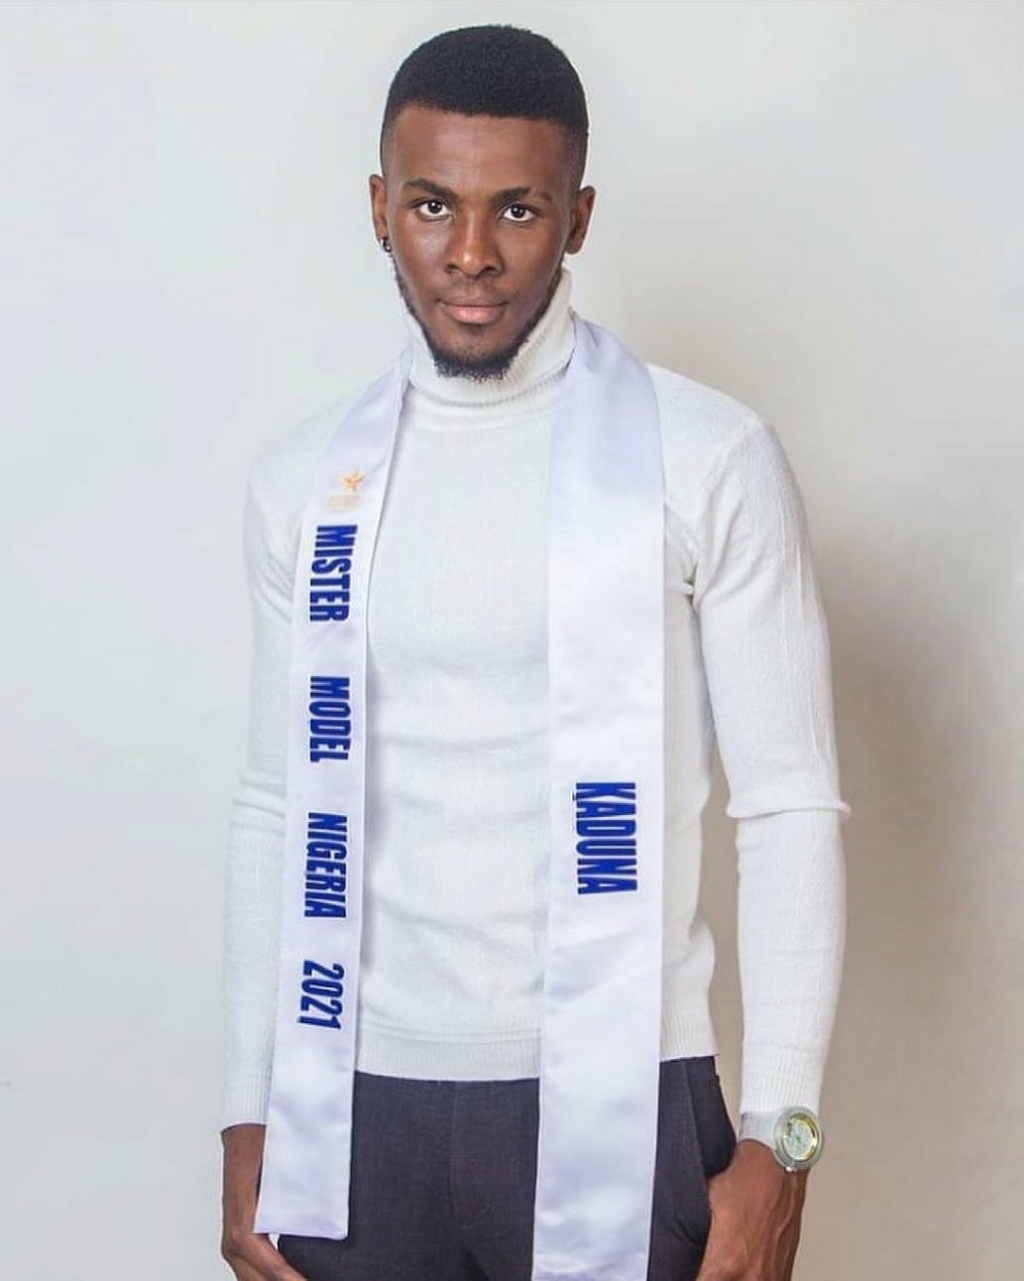 Mister Model Nigeria 2021 is Kelvin NNAJI 19119910